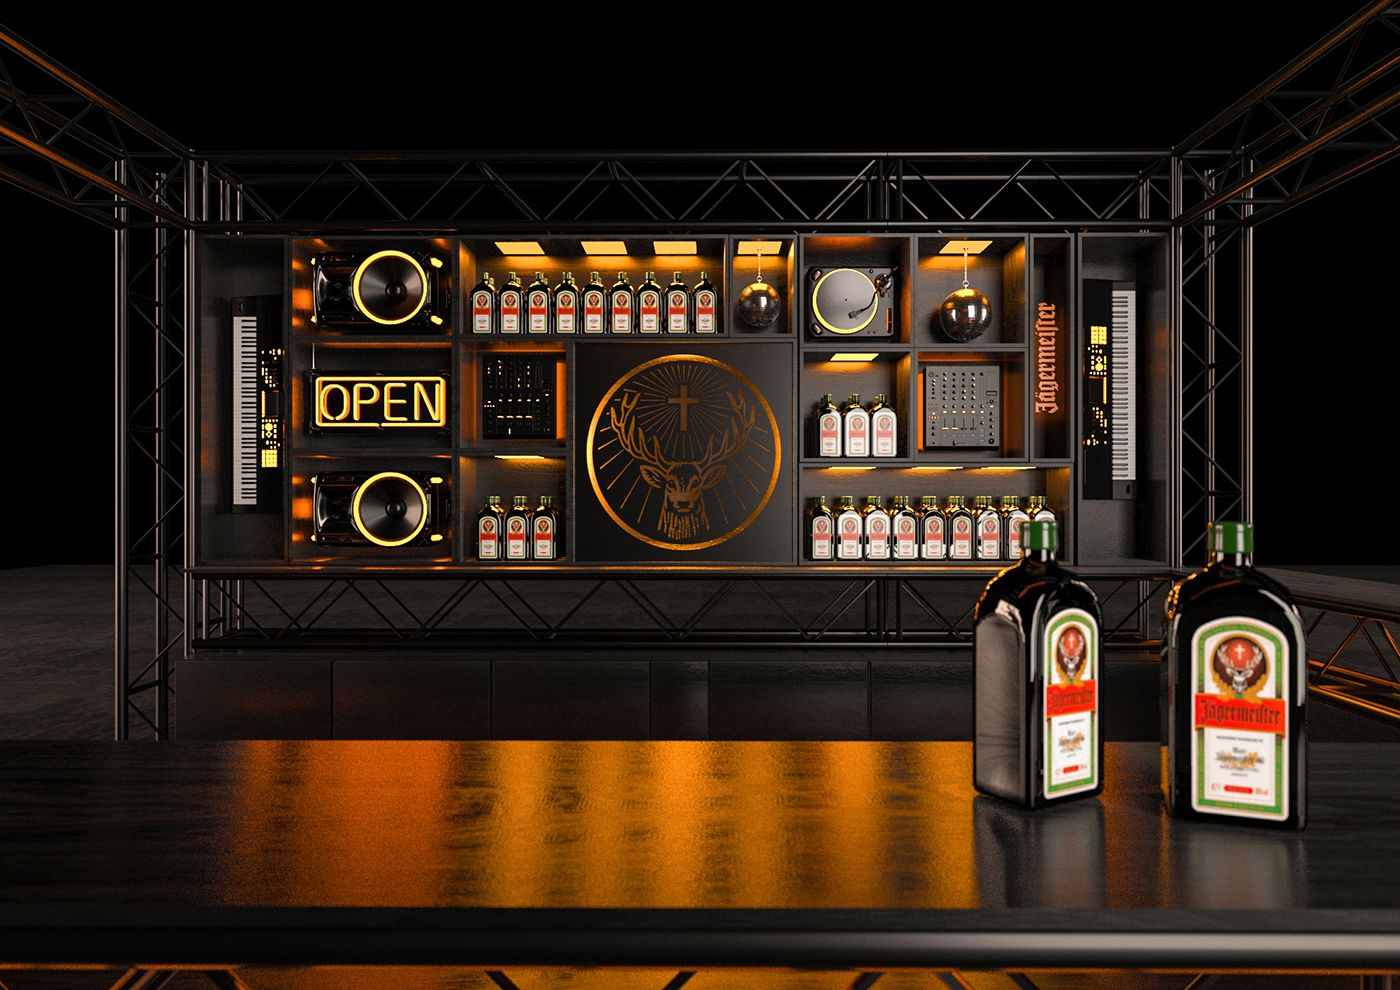 Mobile Bar design mobile bar bar Jagermeister posm pos pop Maximov ПОСМ